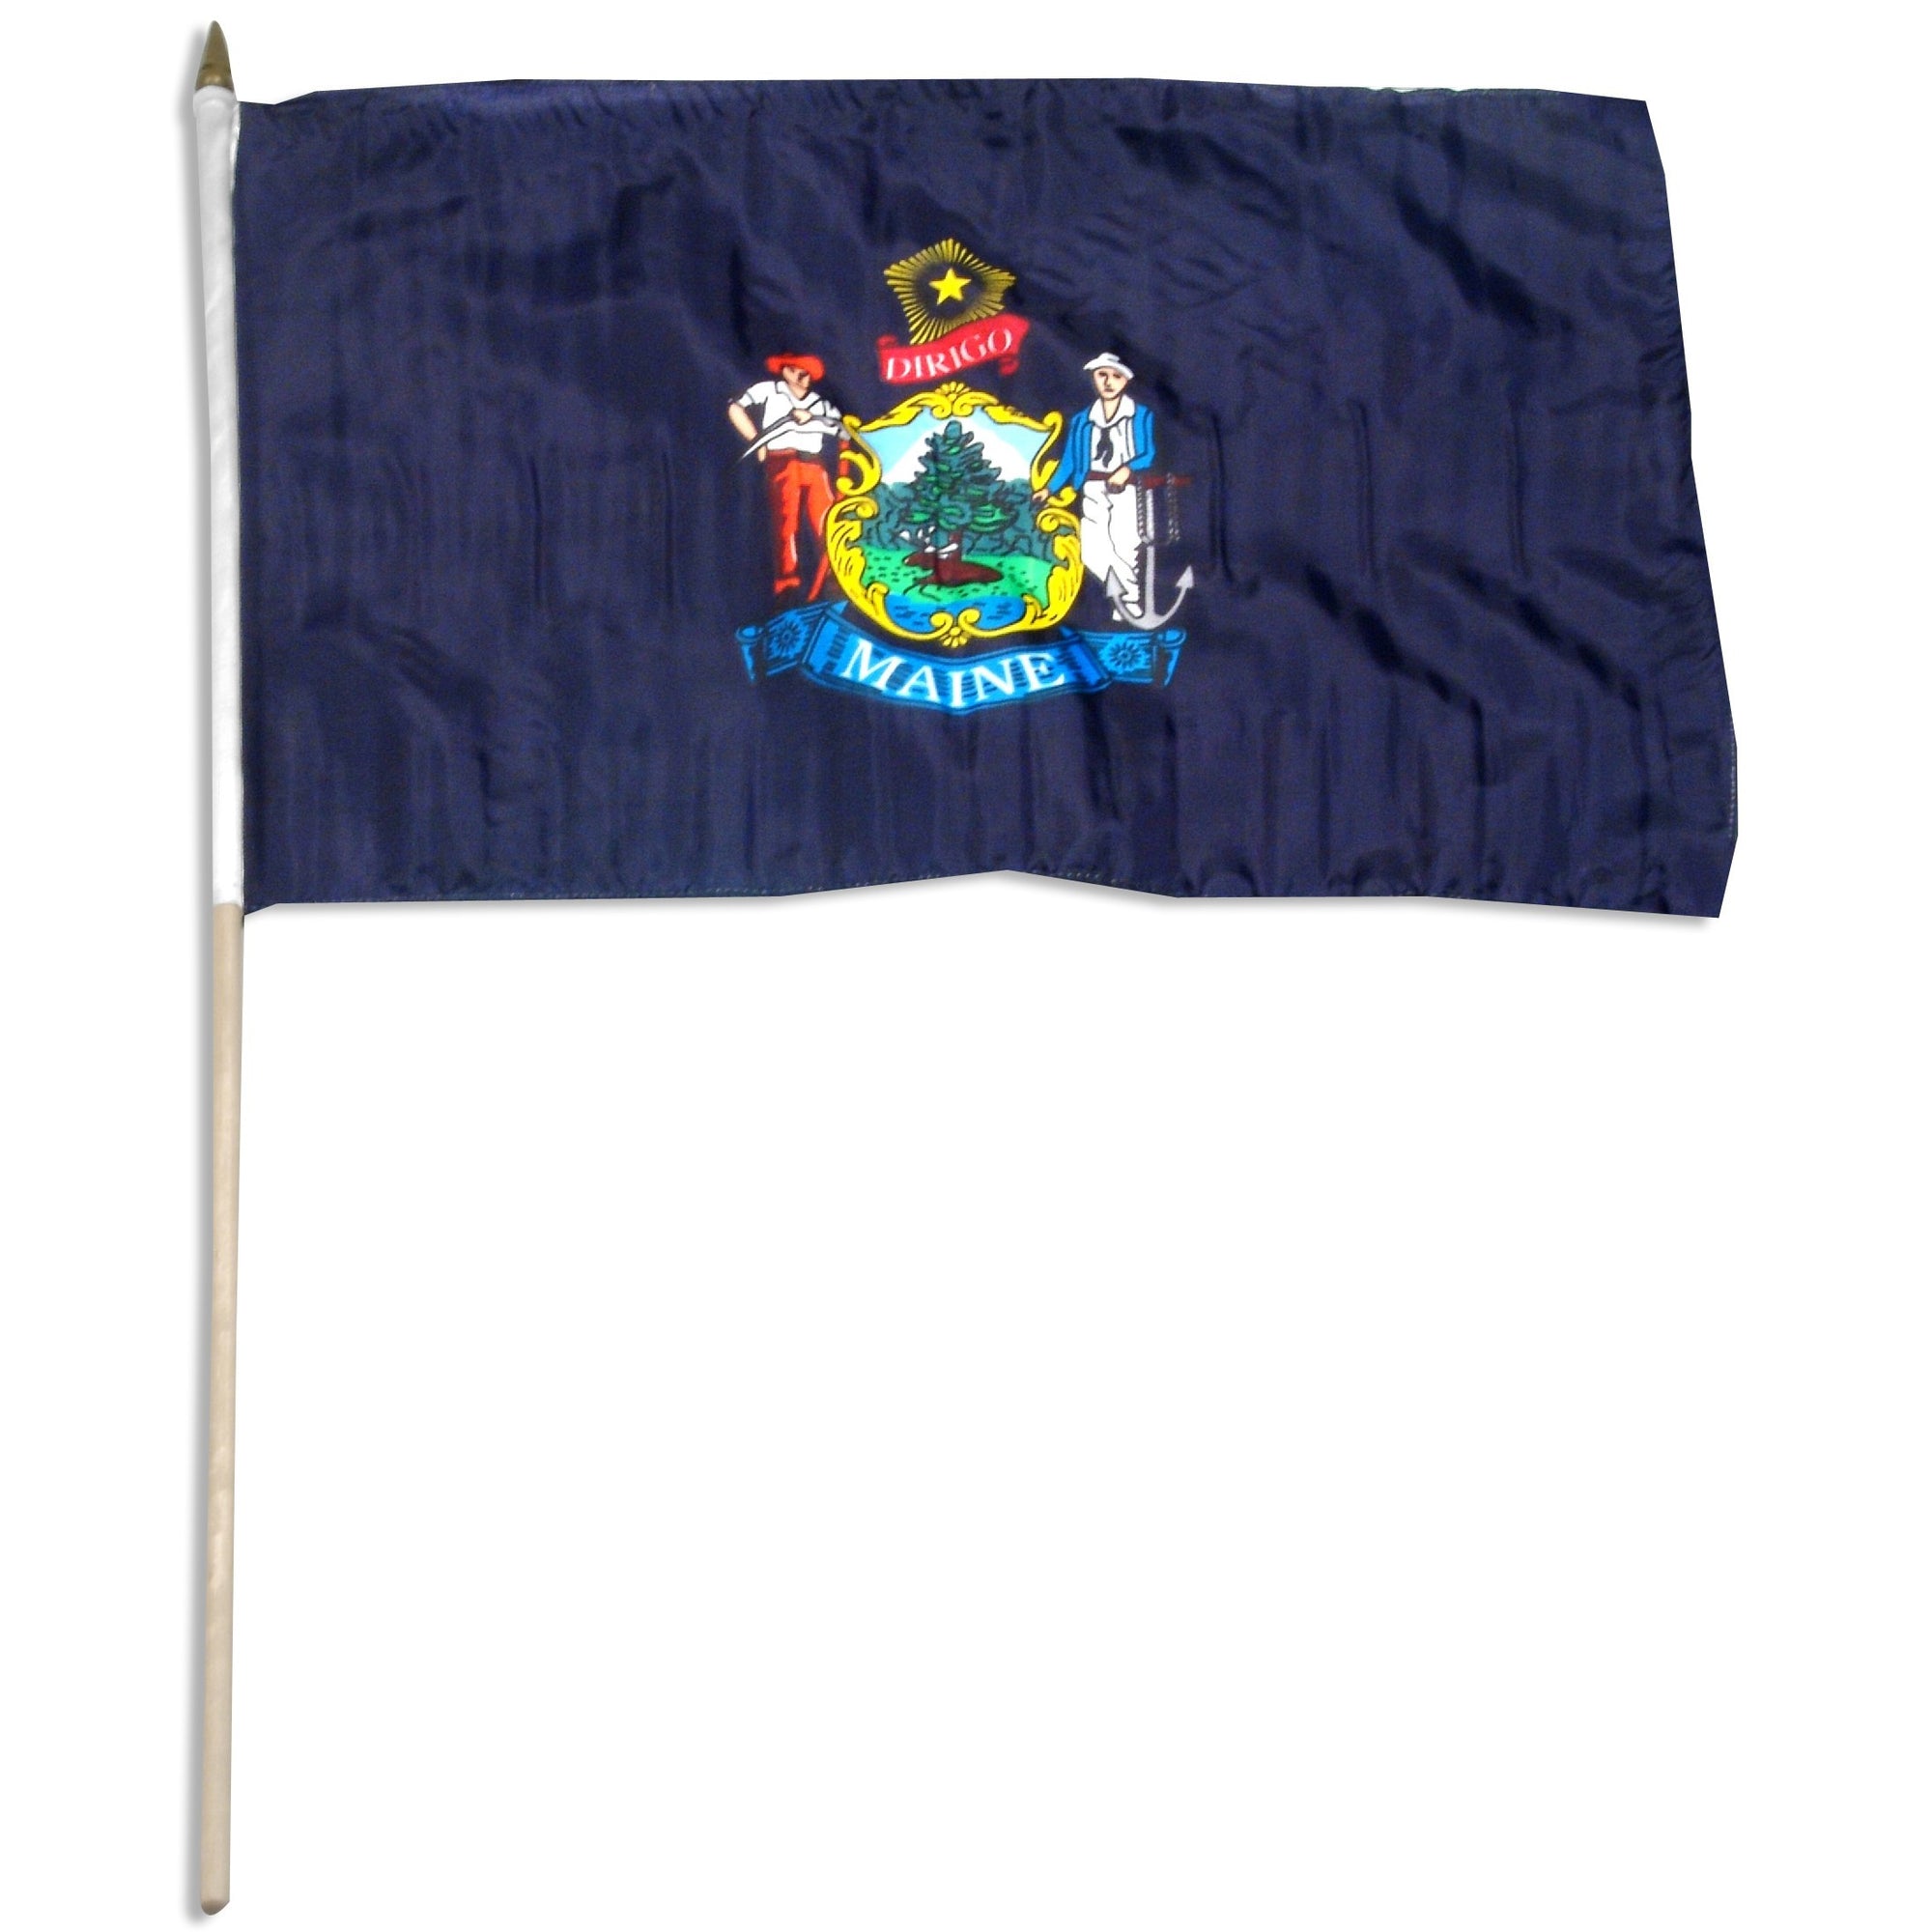 Maine  12" x 18" Mounted Flag